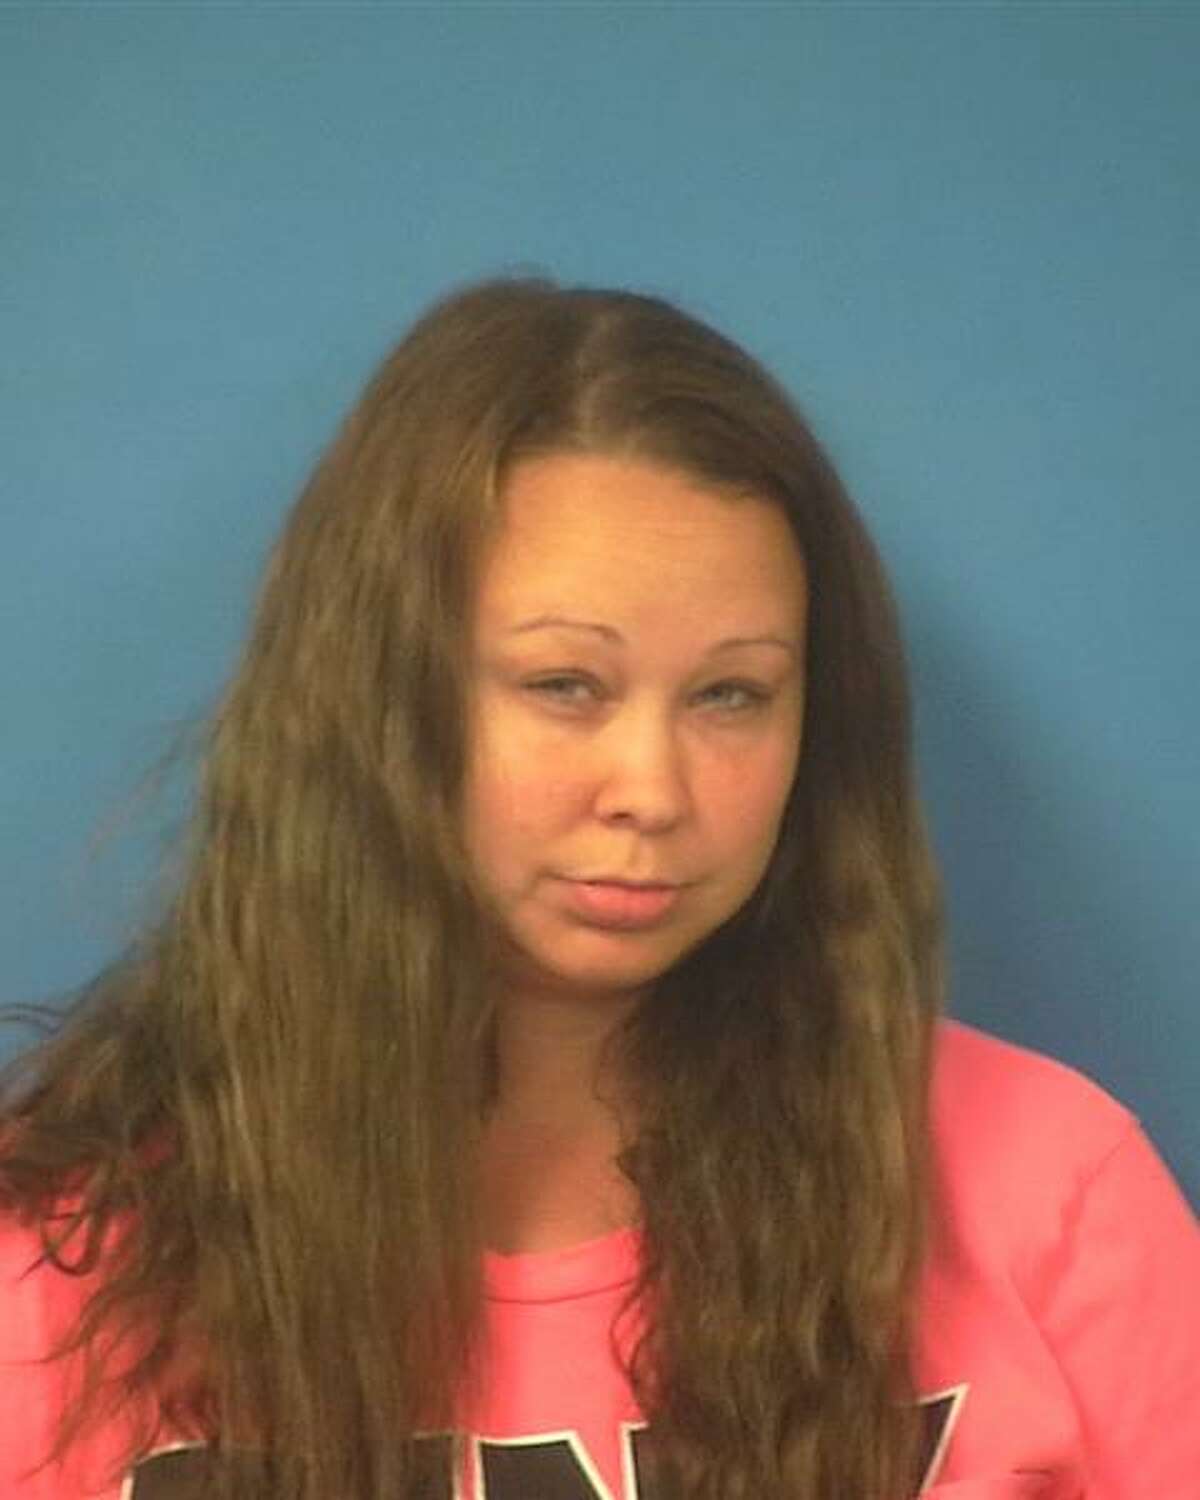 Trisha Meyer was taken into custody in Nevada.